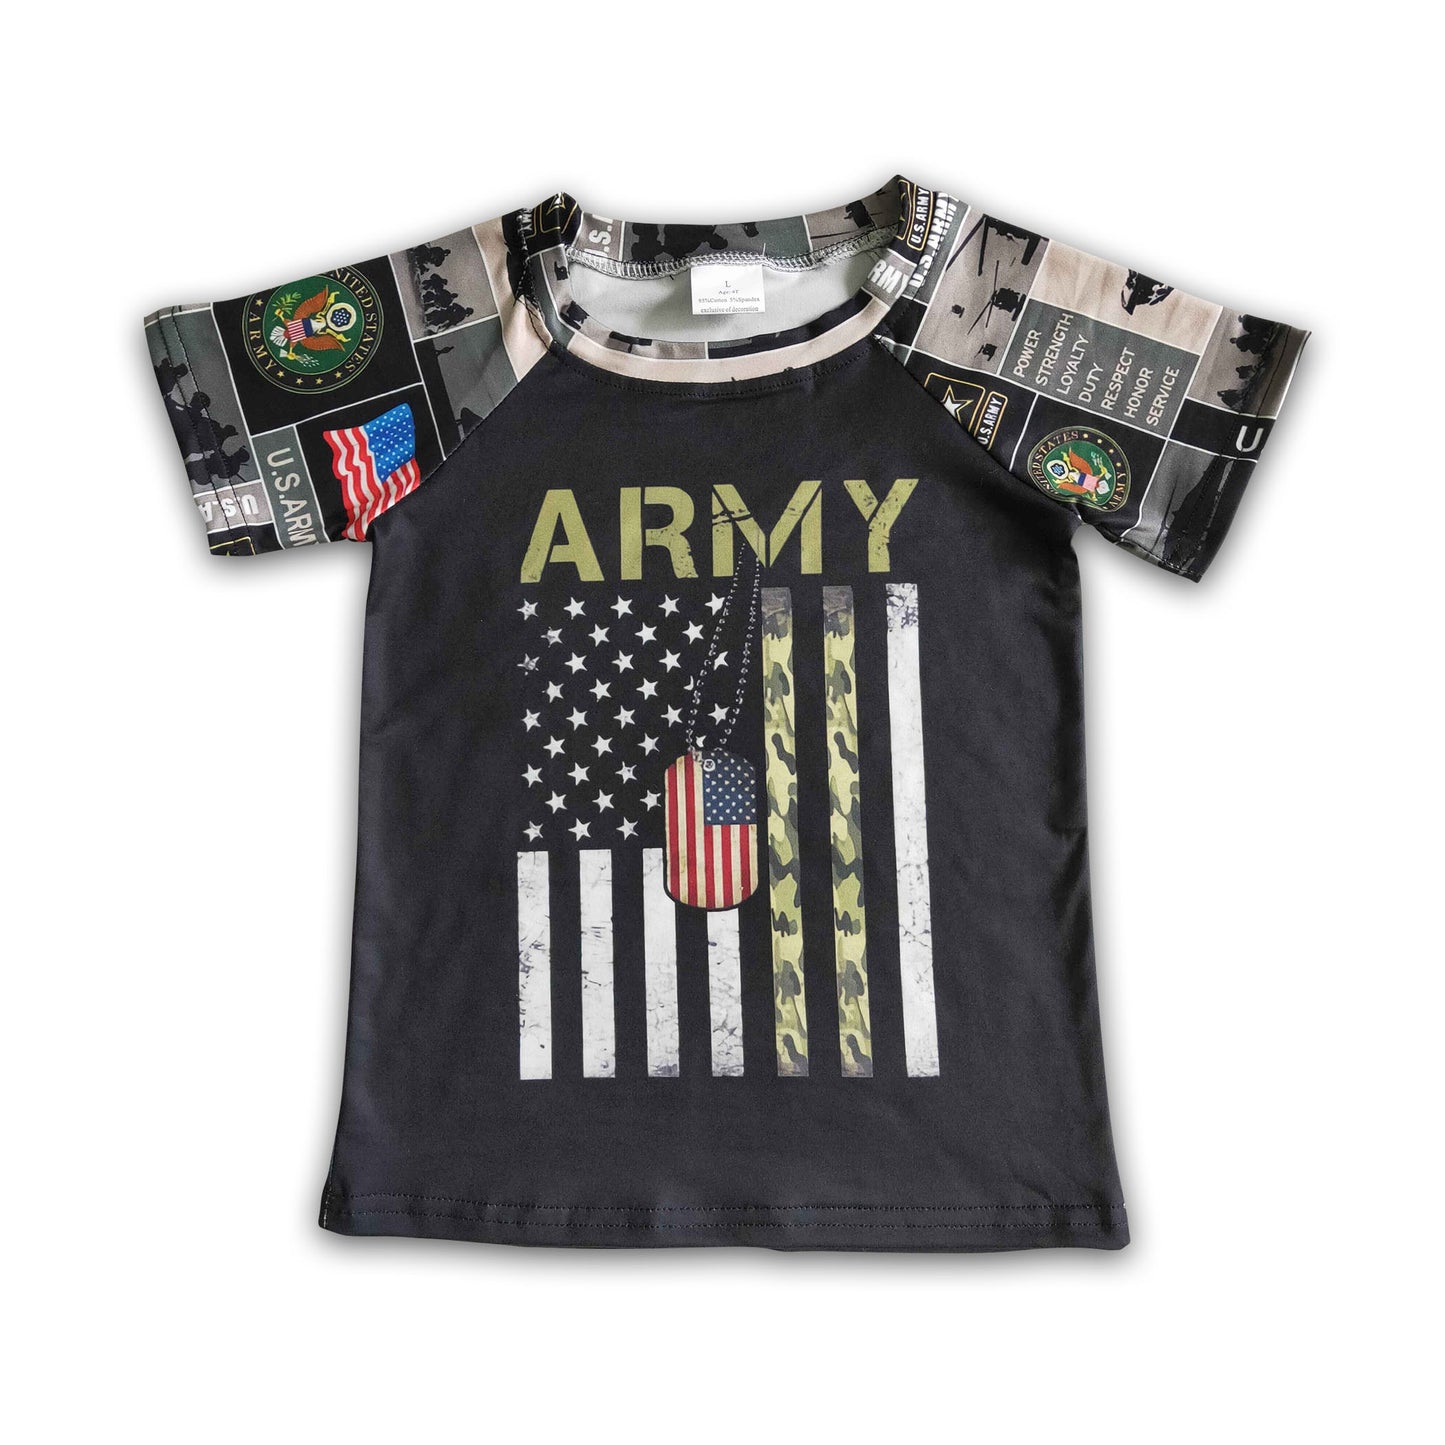 Army print short sleeve boy shirt